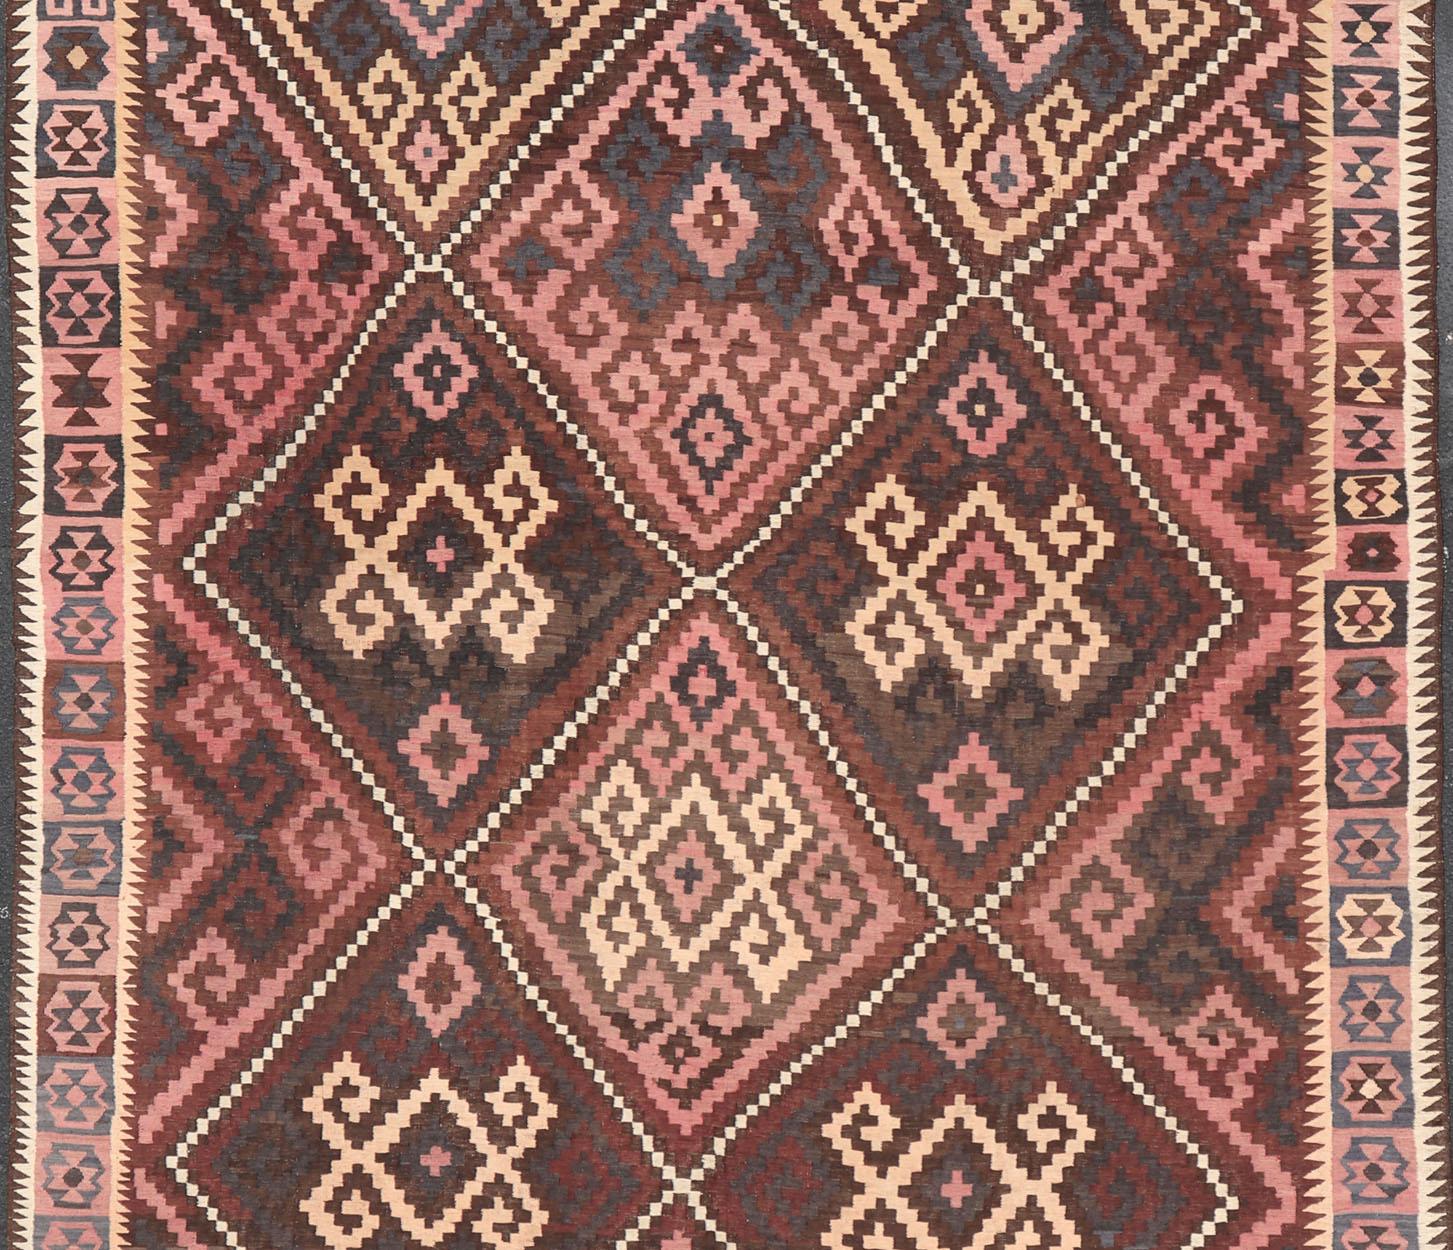 All-Over Geometric Diamond Design Kilim rug with all-over geometric diamond design, Keivan Woven Arts / rug V21-0806, country of origin / type: Afghan / Kilim, circa 1940

Measures: 9'7 x 16'3.